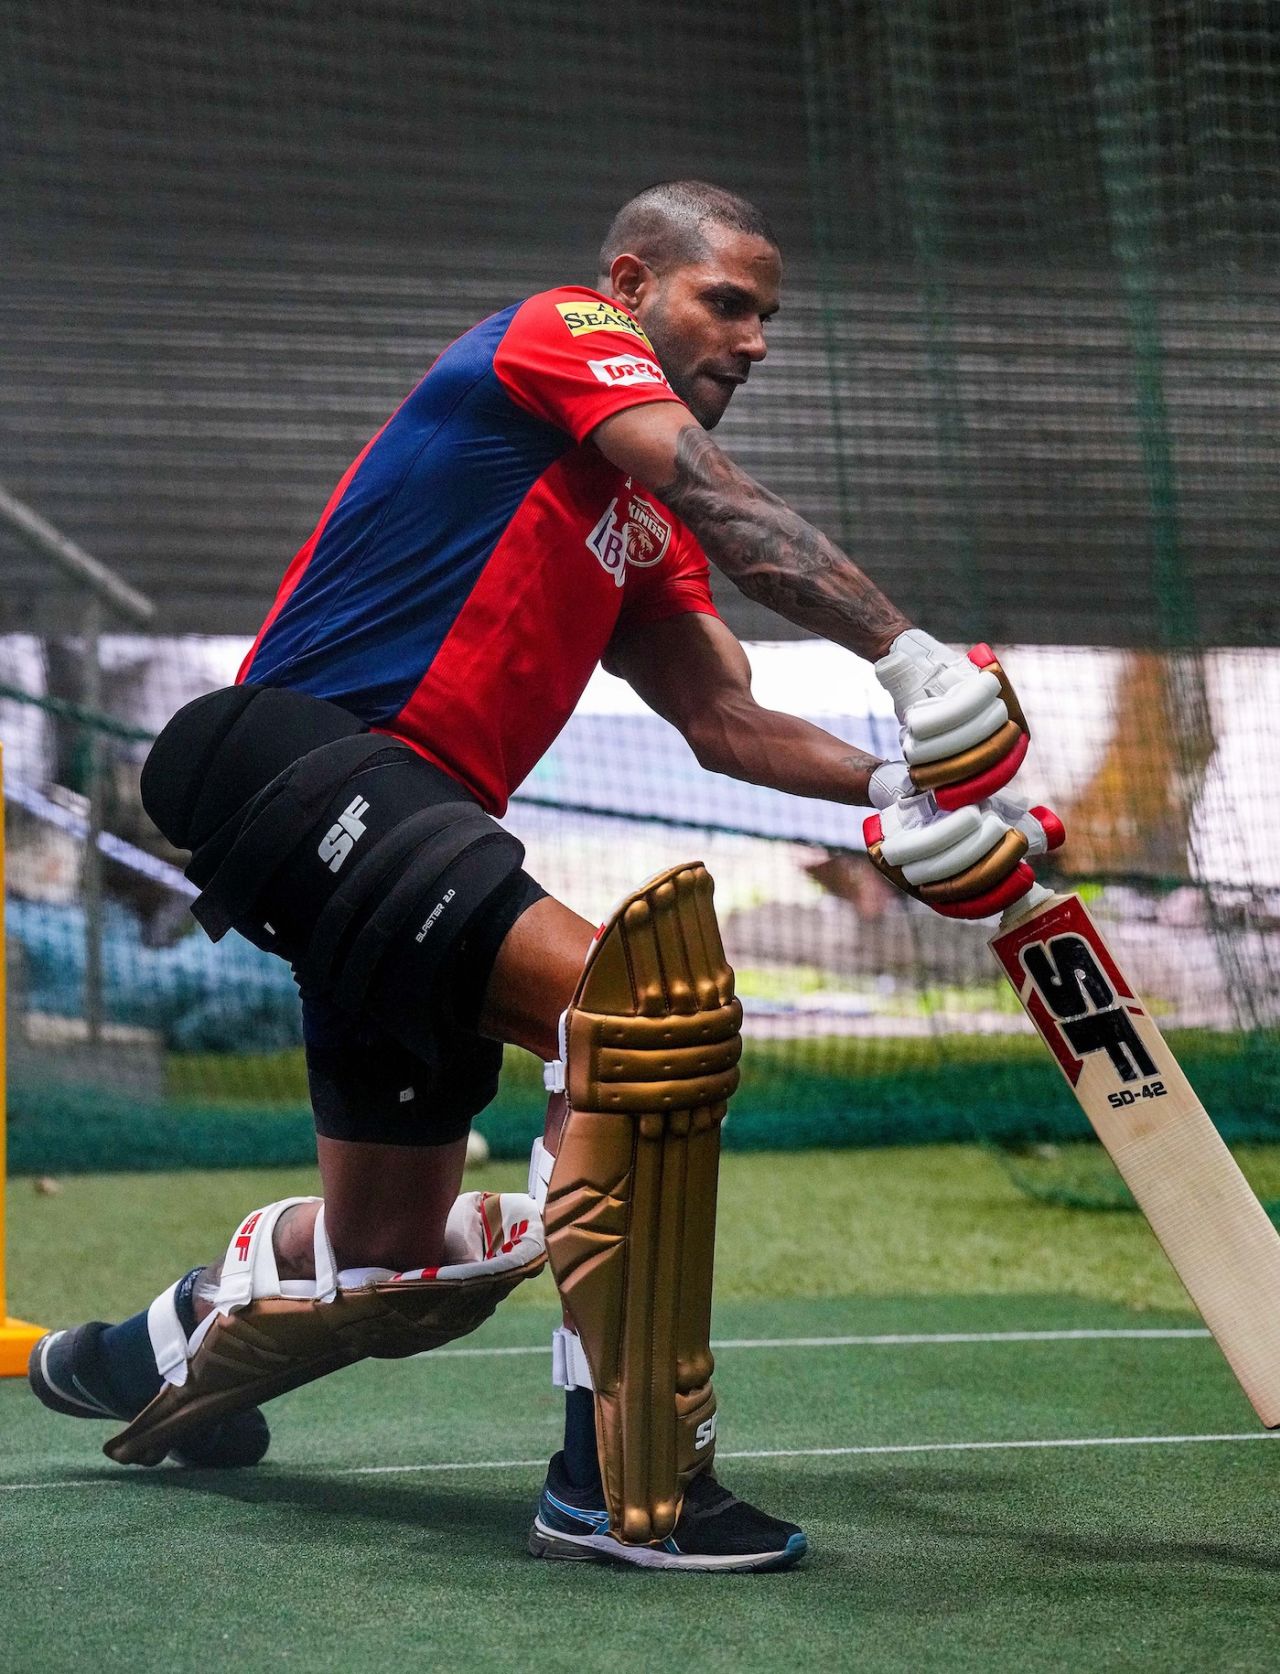 Shikhar Dhawan bats in the nets before the season, Mohali, IPL 2023, March 31, 2023